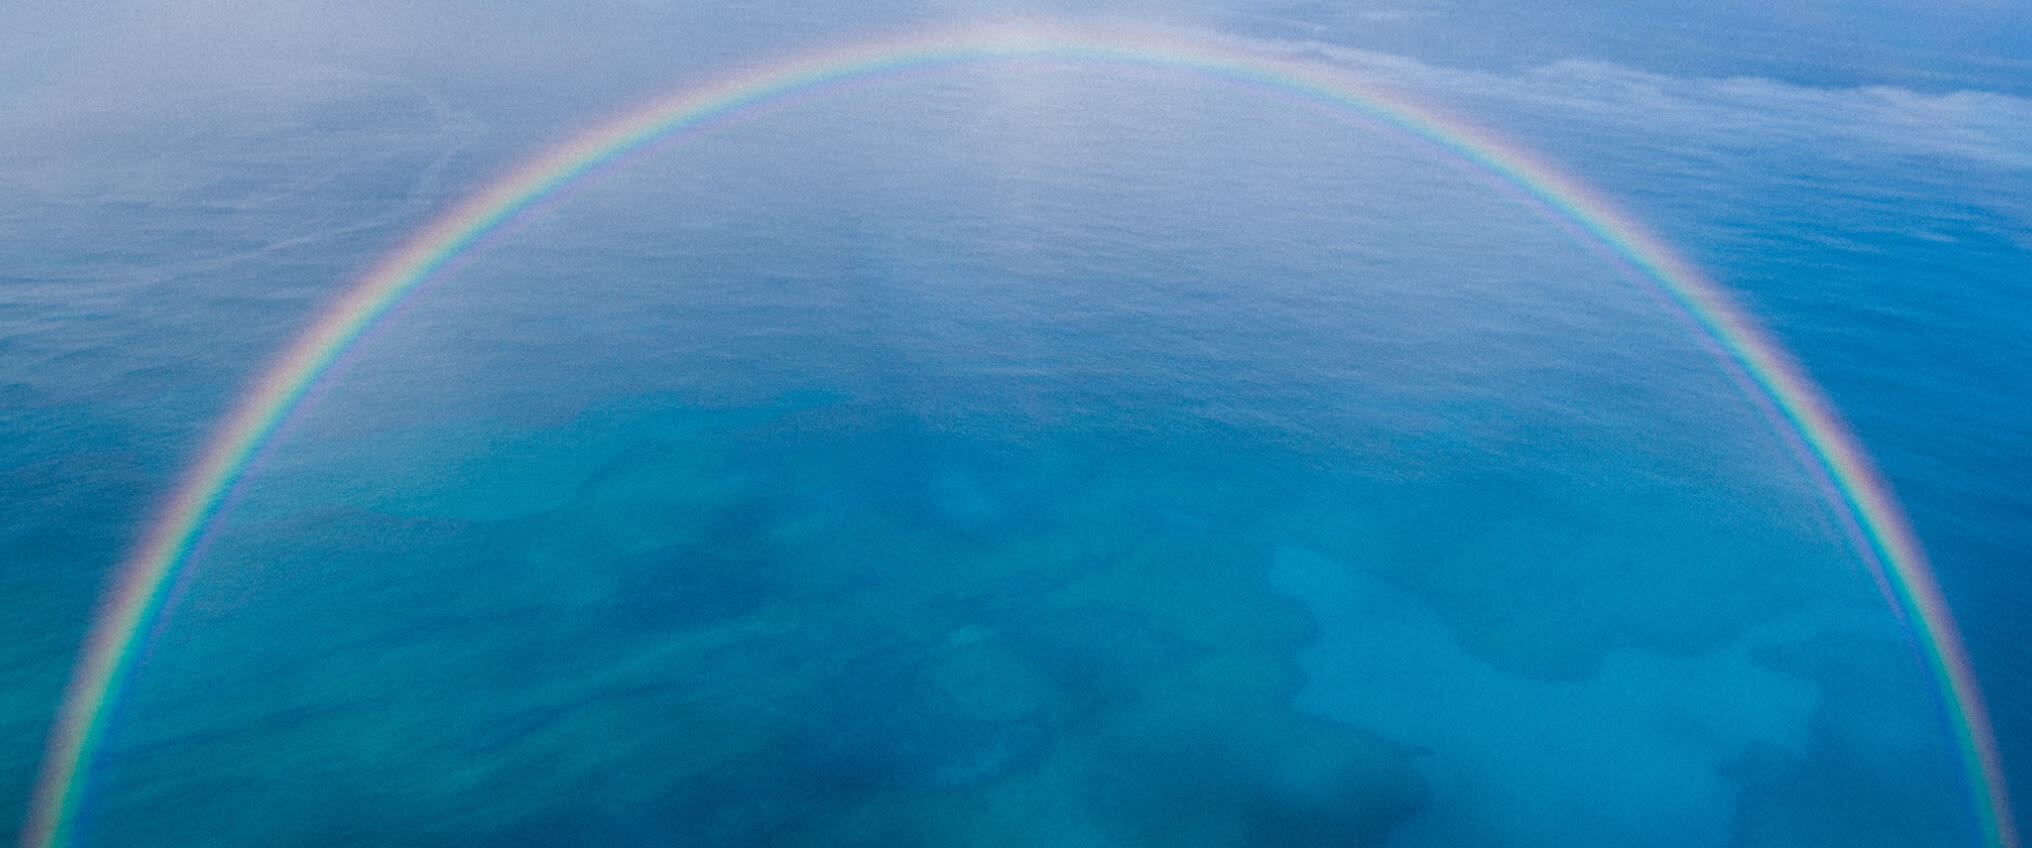 Image of rainbow above sea